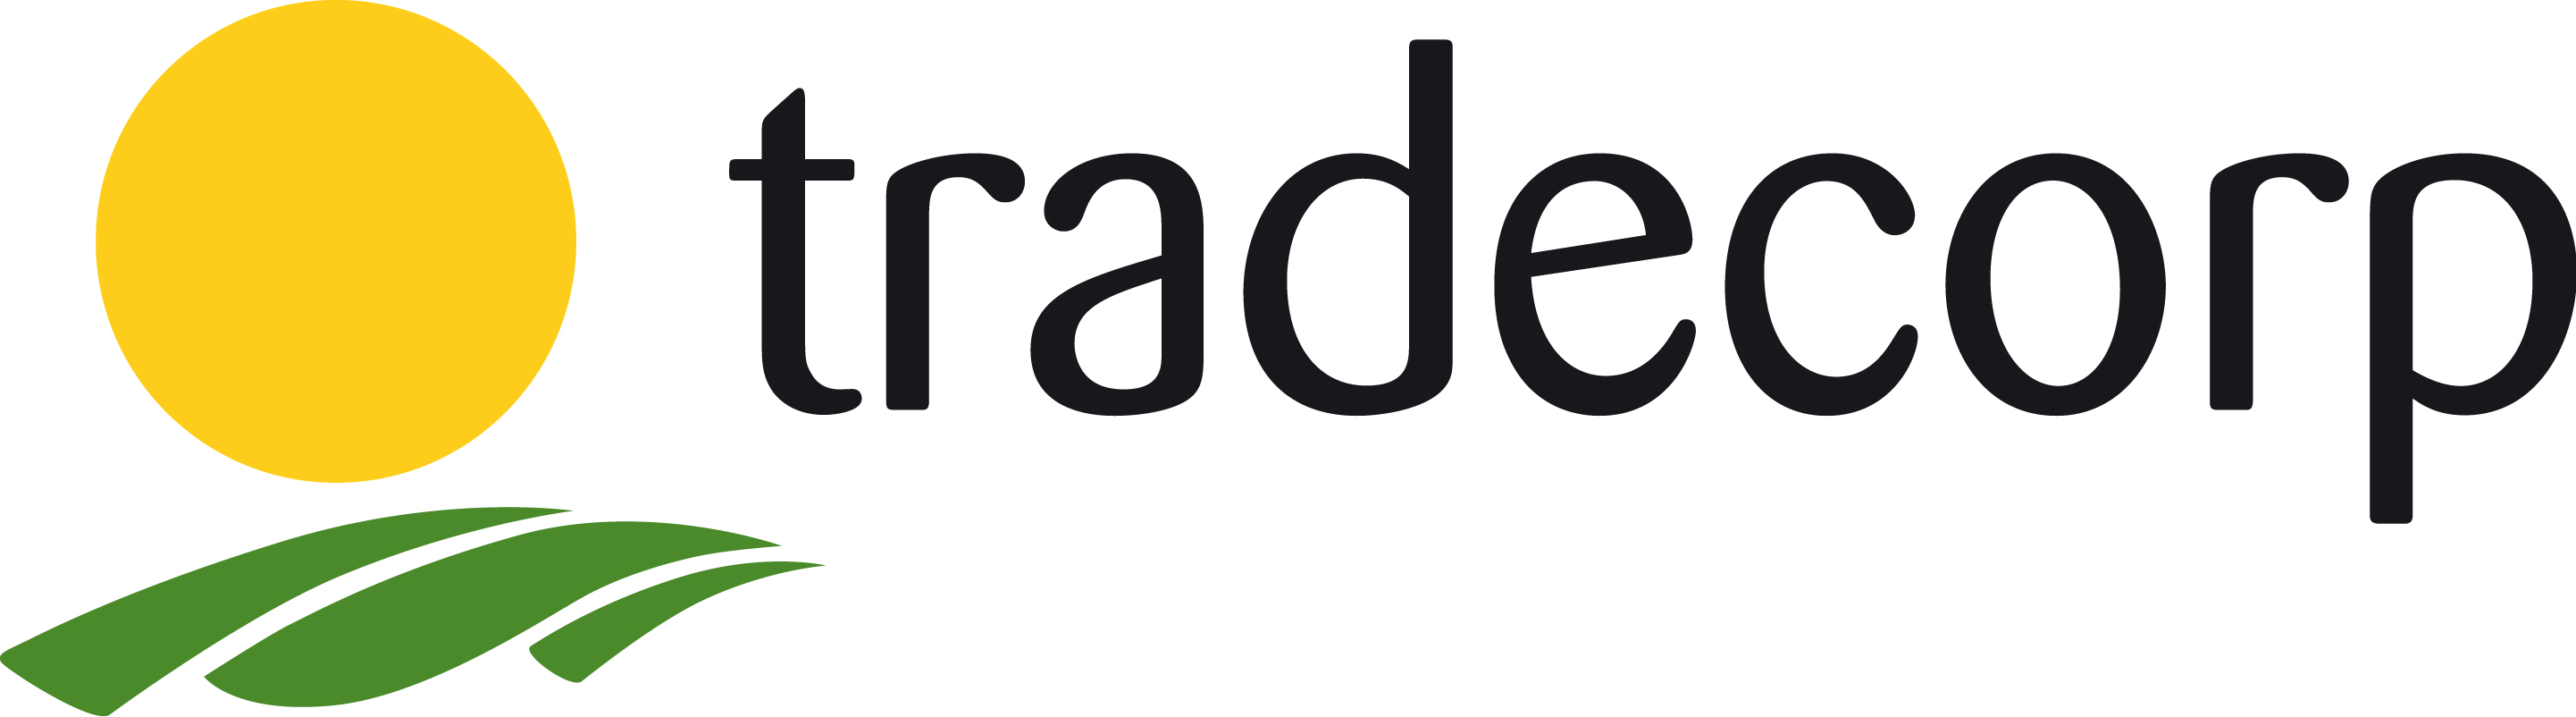 TRADECORP logo 040520